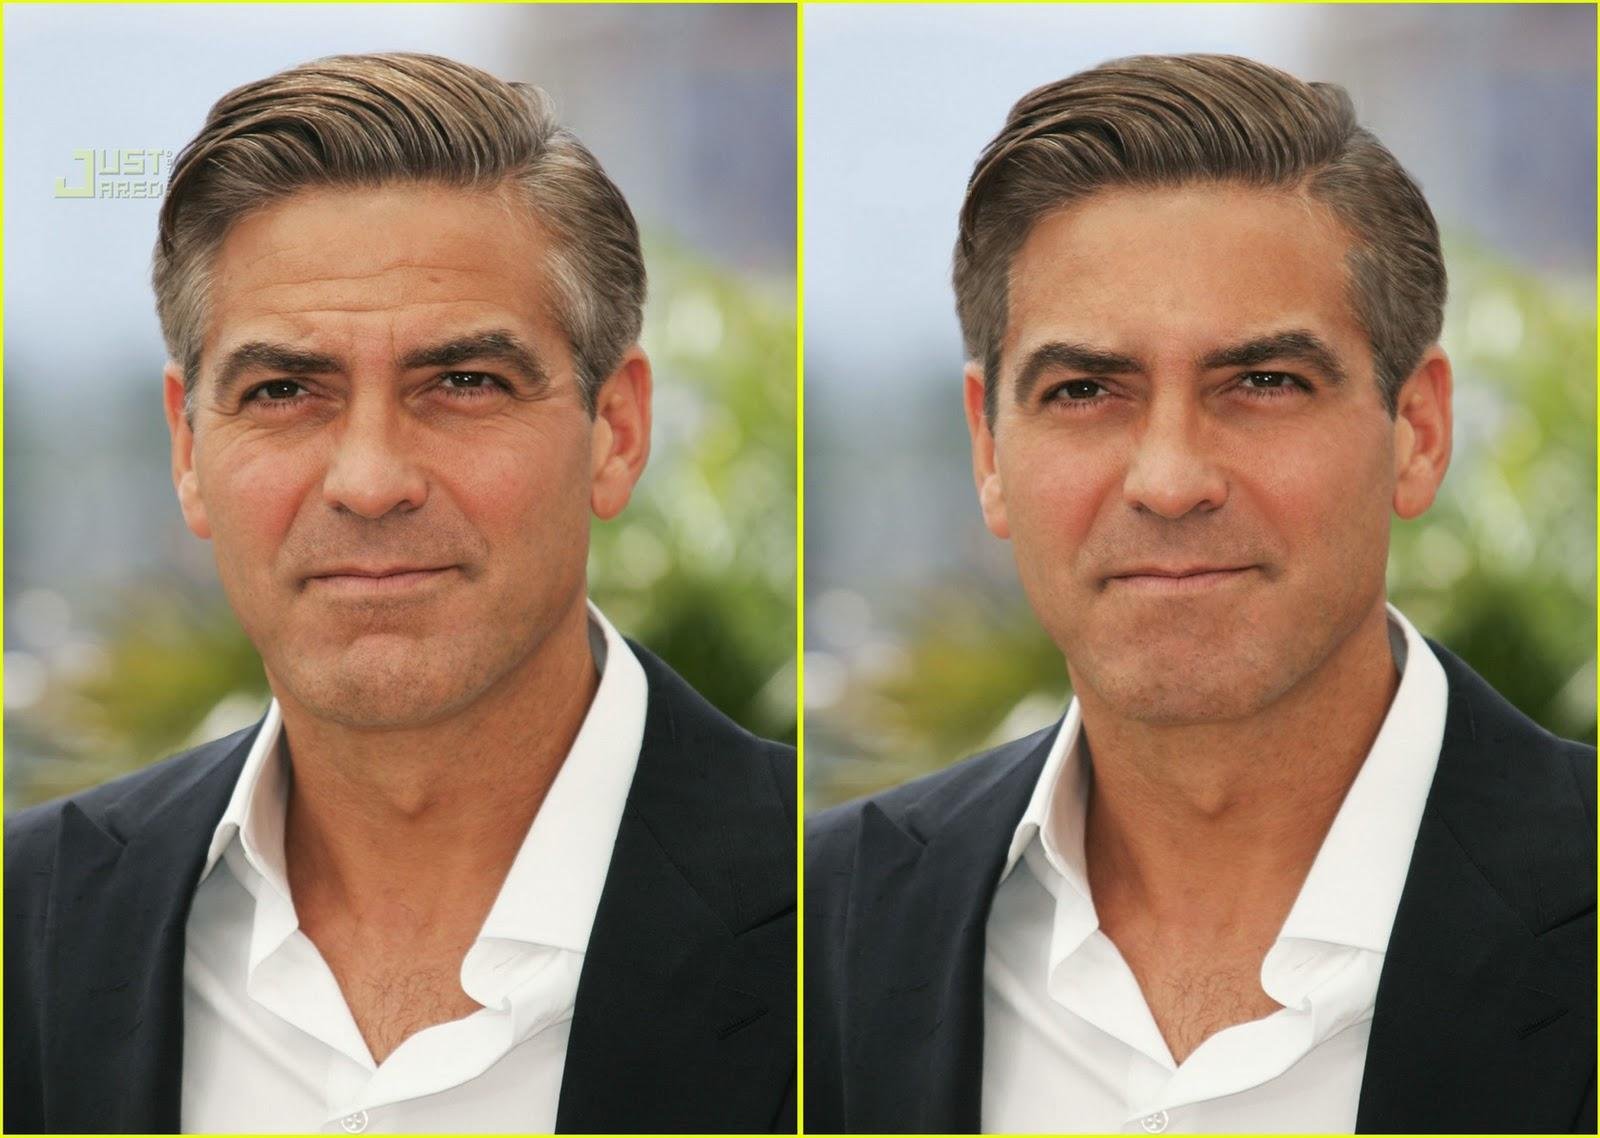 Фотошоп фото звезда. Джордж Клуни фото без фотошопа. Звезды до и после фотошопа. Звезды без фотошопа мужчины. Мужчины знаменитости с морщинами.